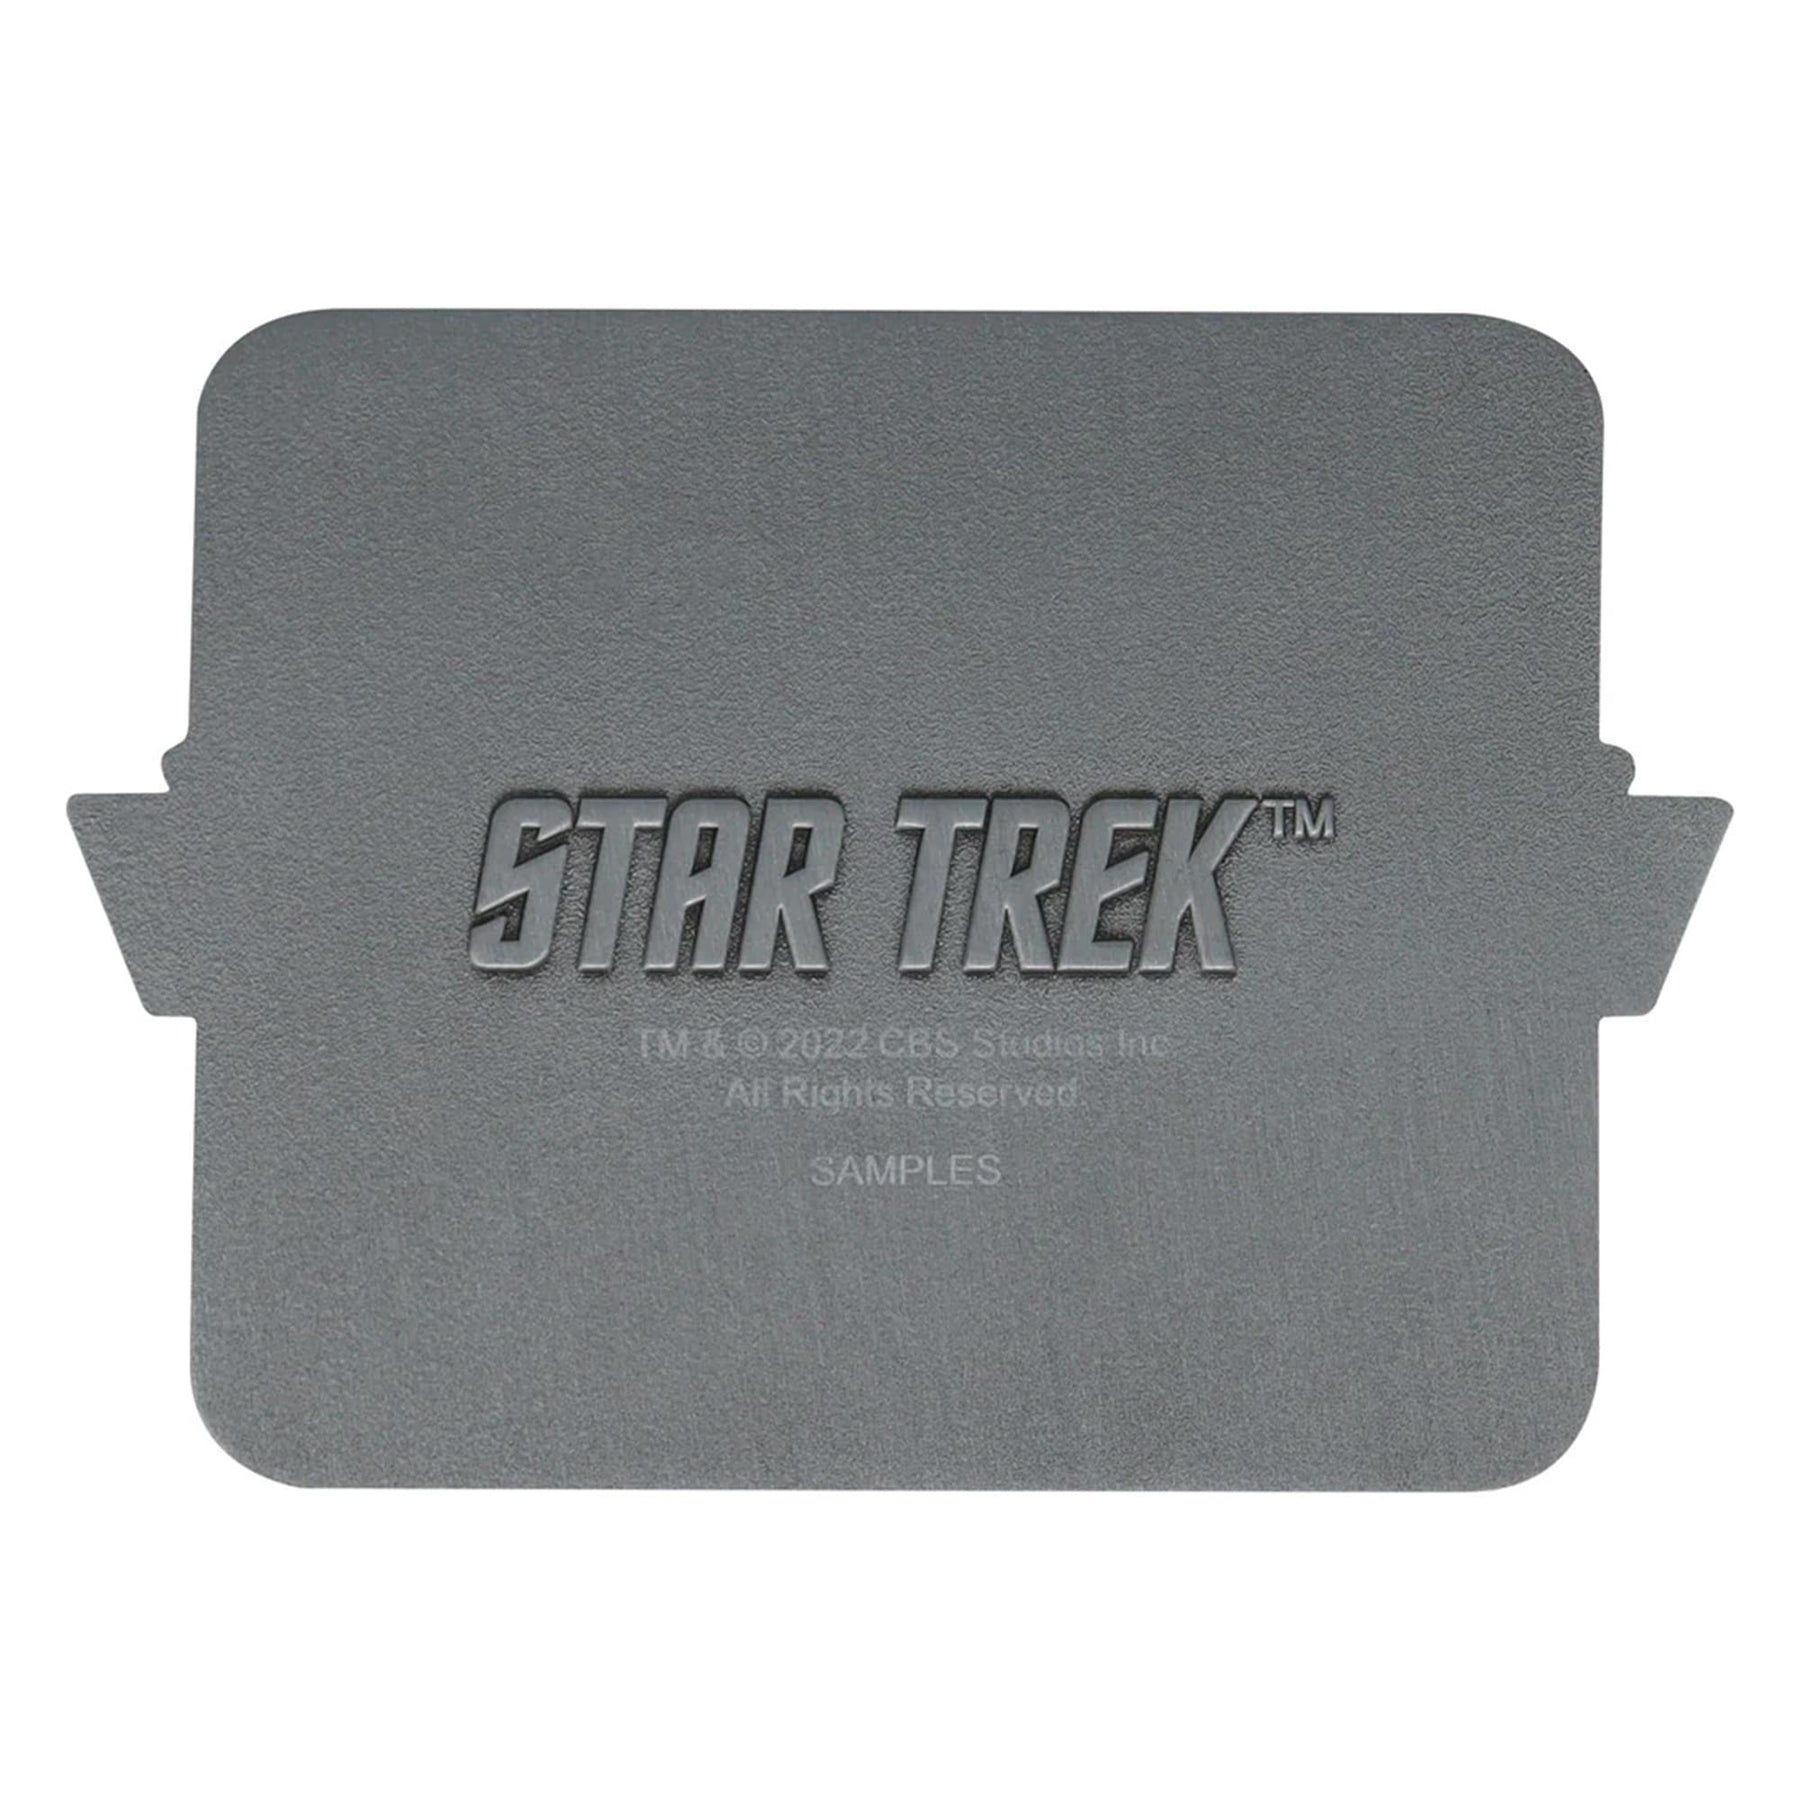 Star Trek Limited Edition Kobayashi Maru Medallion